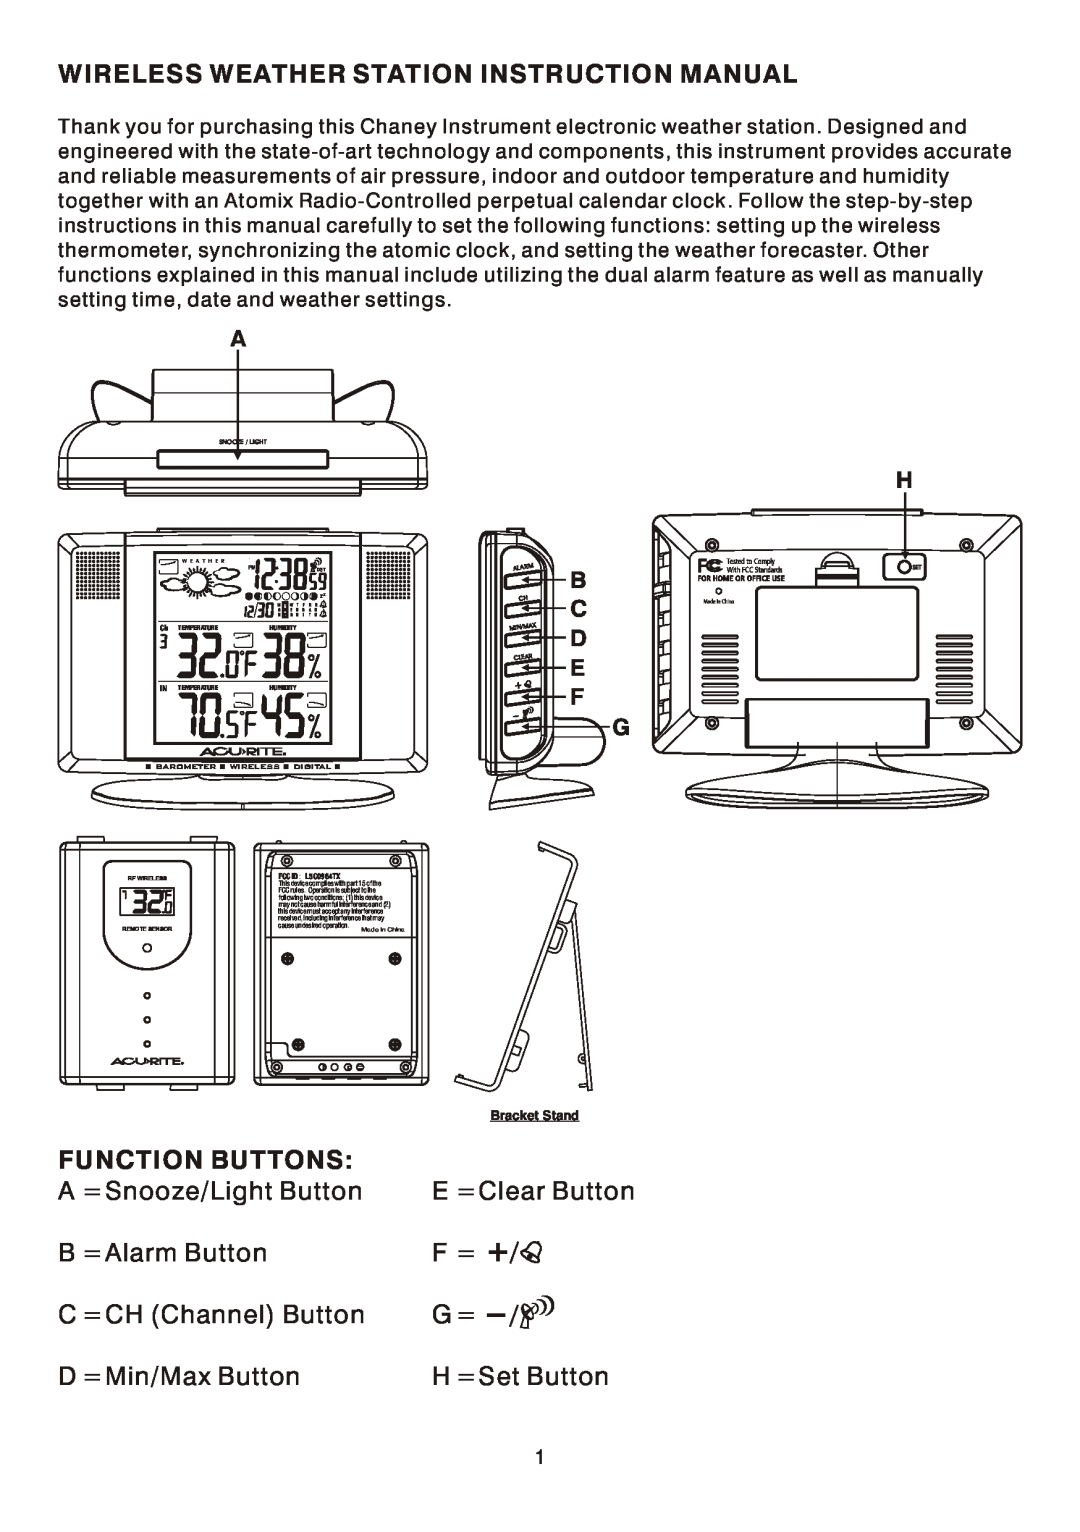 Chaney Instrument L5C0964TX instruction manual Wireless Weather Station Instruction Manual, Function Buttons, B C D E F G 